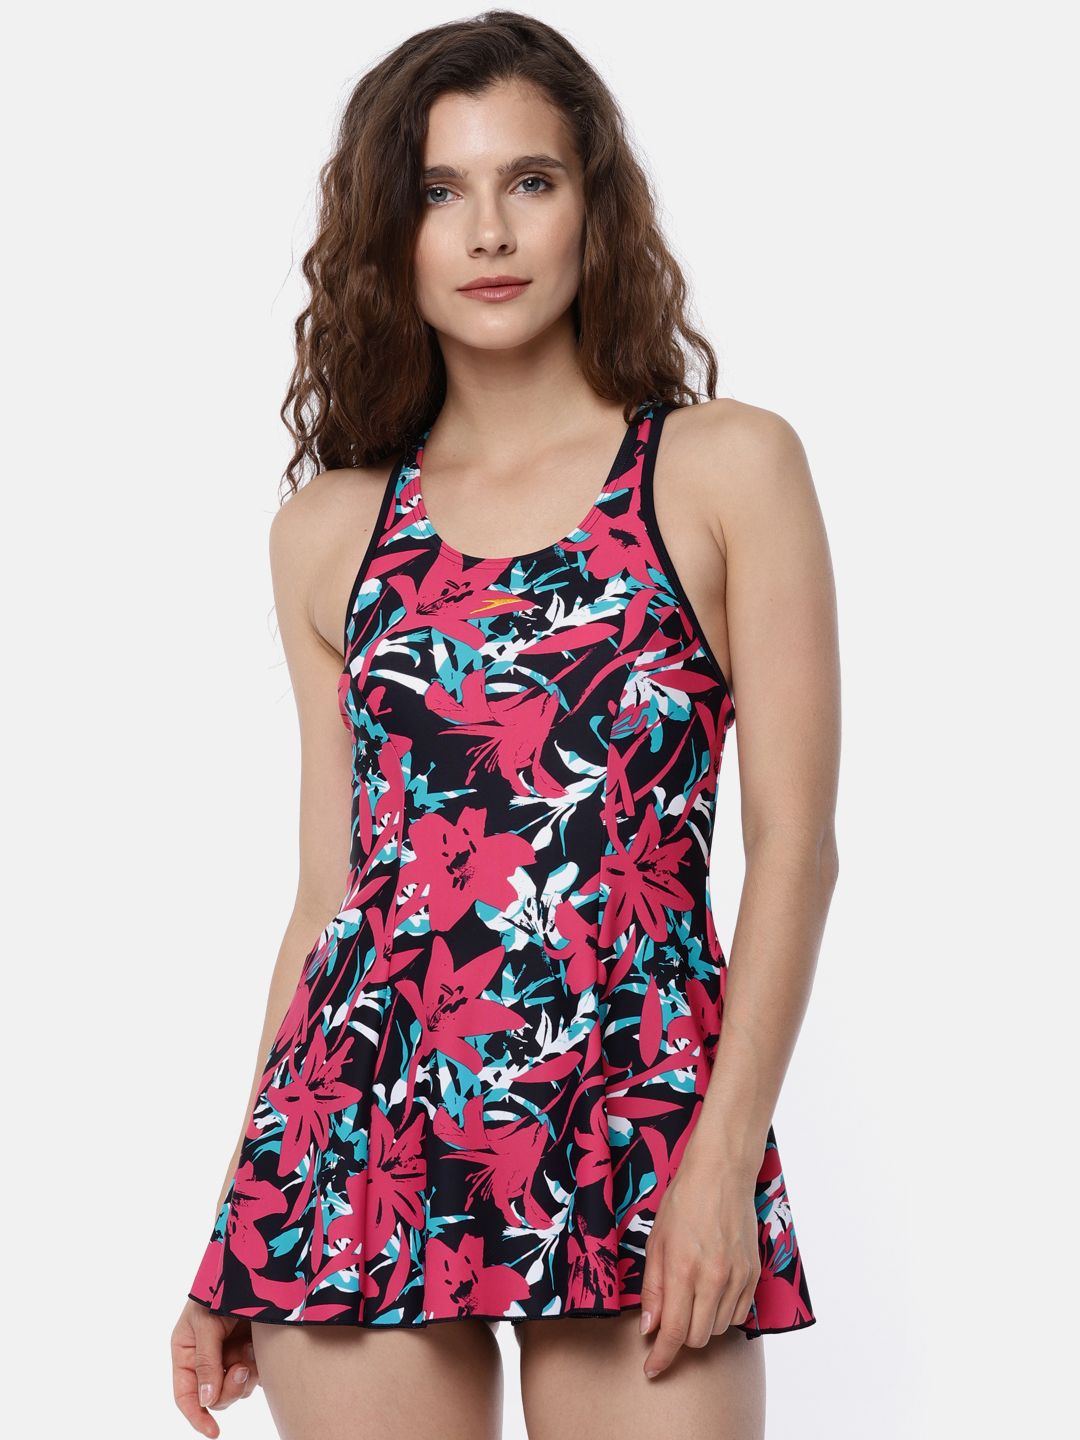 Speedo Black & Pink Floral Printed Swimming Dress 8088765431 Price in India